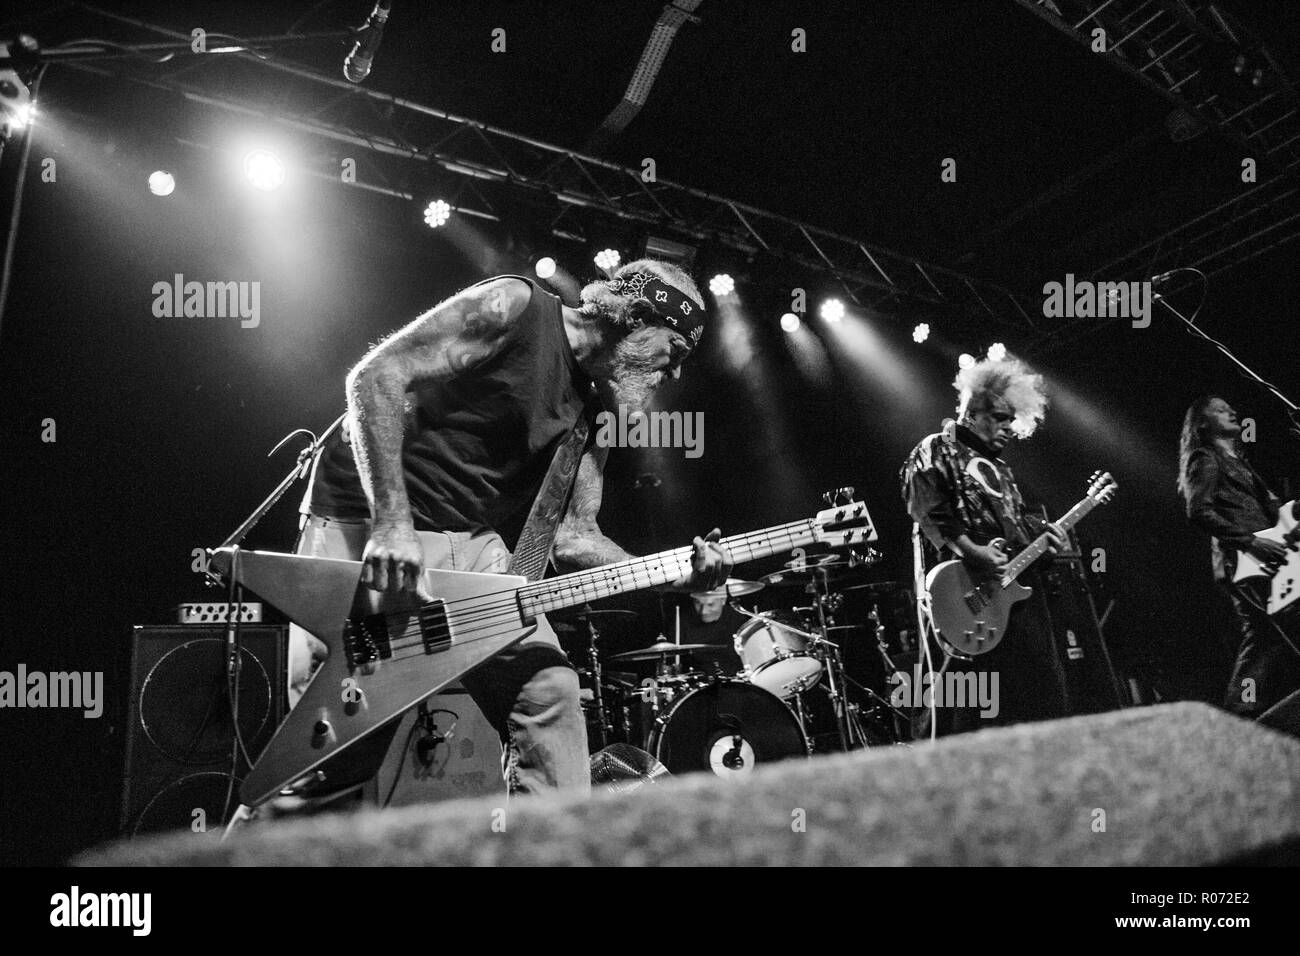 Melvins (Jeff Pinkus bass player) - 26th October 2018 - Leeds Stylus Stock Photo